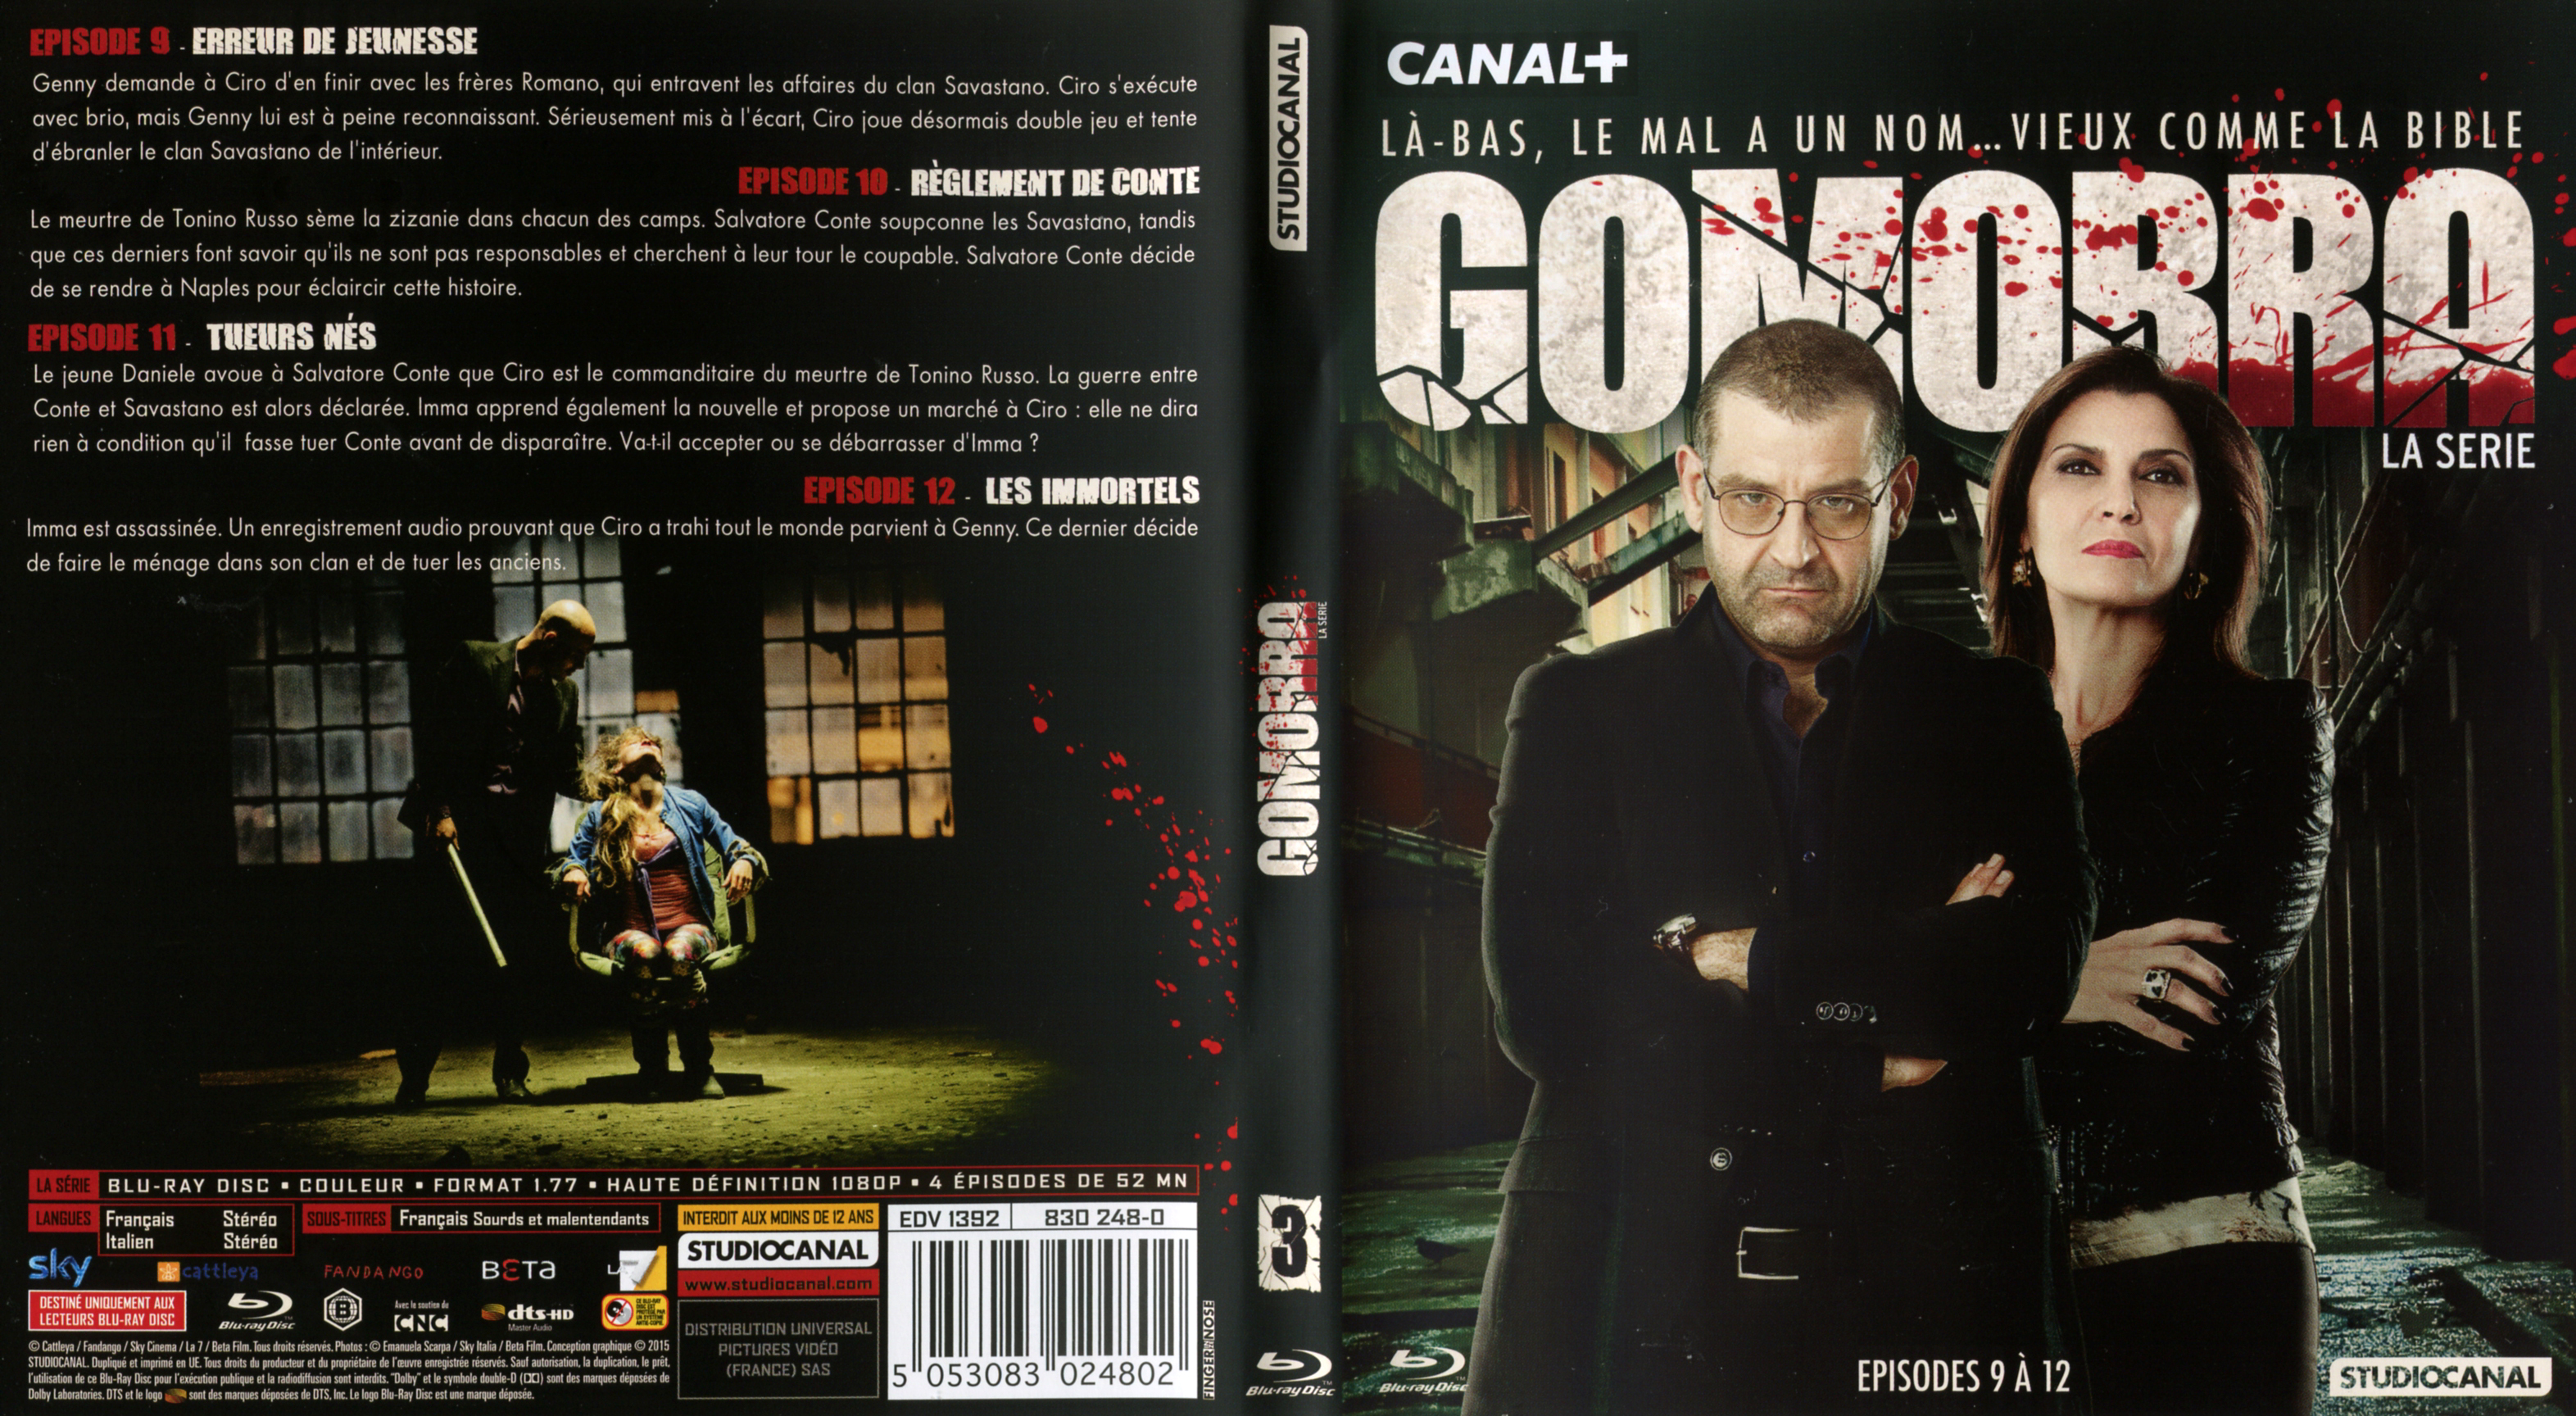 Jaquette DVD Gomorra la srie Ep 9-12 (BLU-RAY)